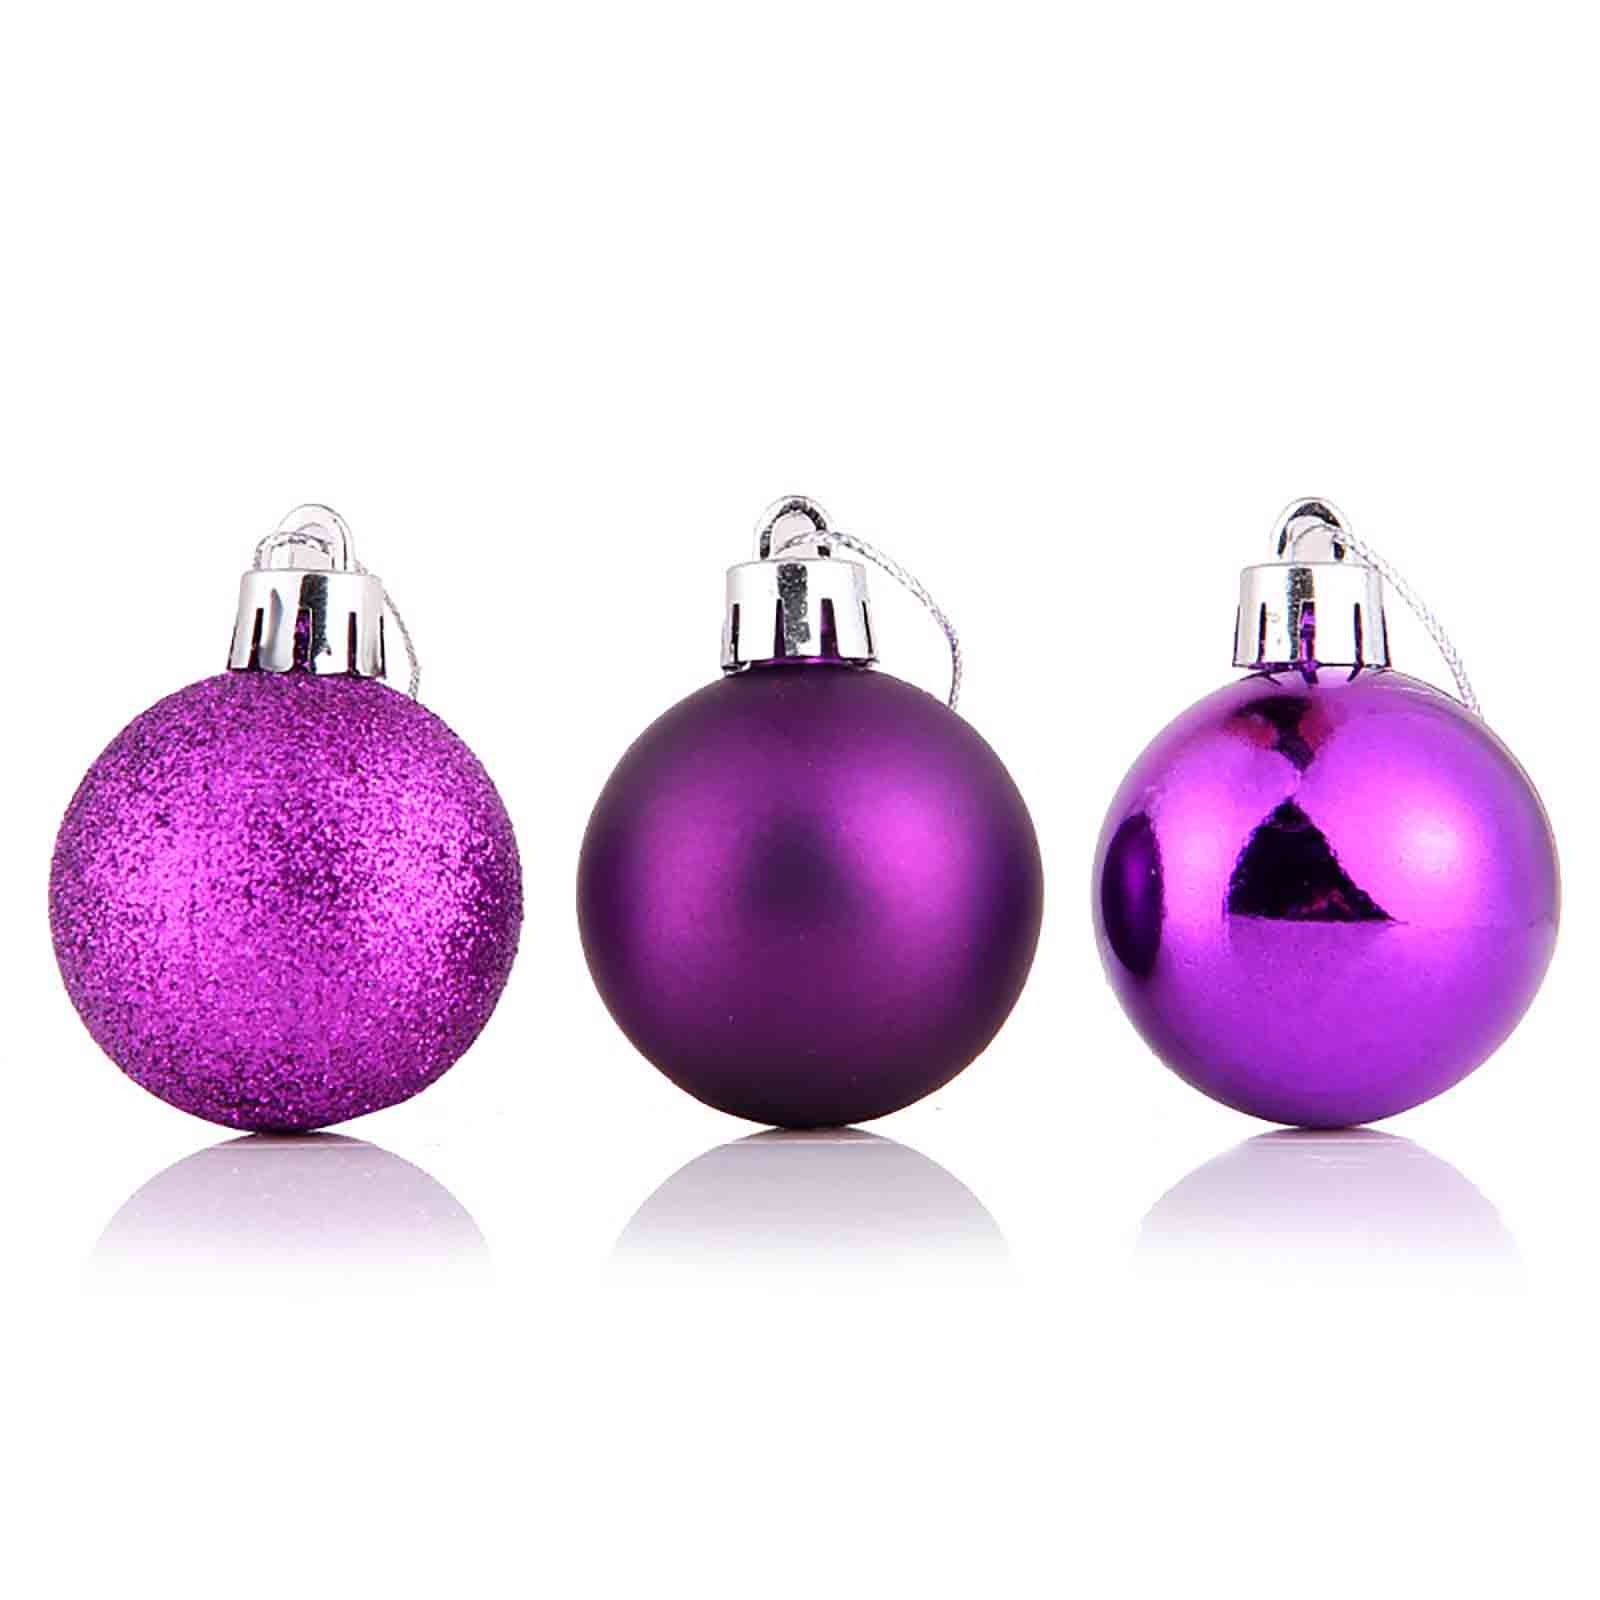 Usmixi Under 5 Dollars Christmas Balls, Christmas Tree Decorations, Christmas Pendants, Colored Centimeters, Christmas Balls, Bright Plastic Christmas